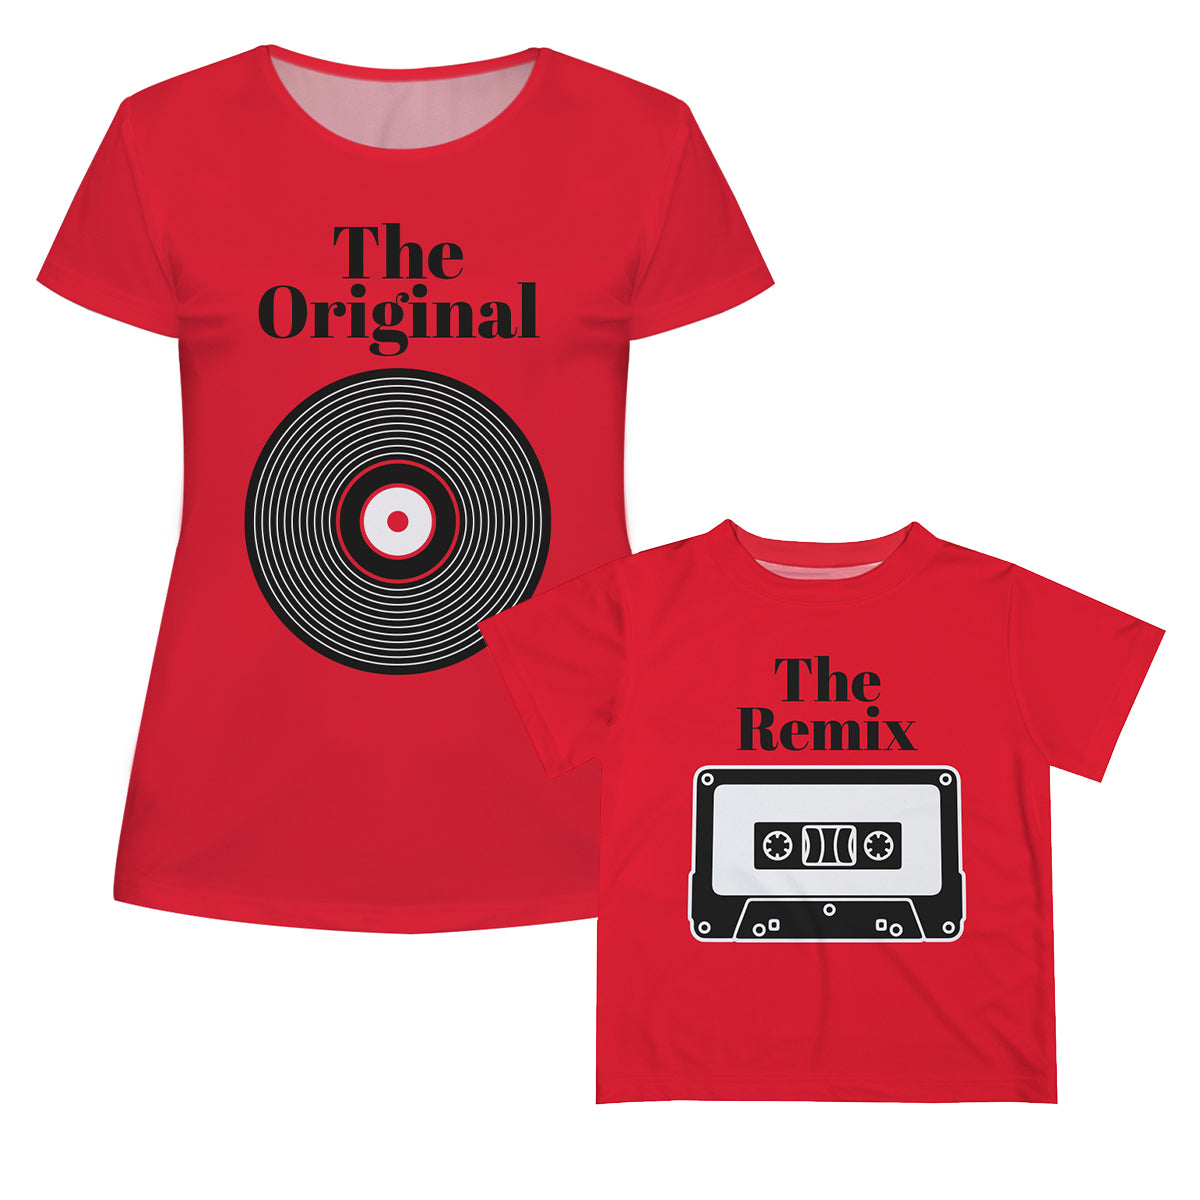 The Original Disk Red Short Sleeve Tee Shirt - Wimziy&Co.